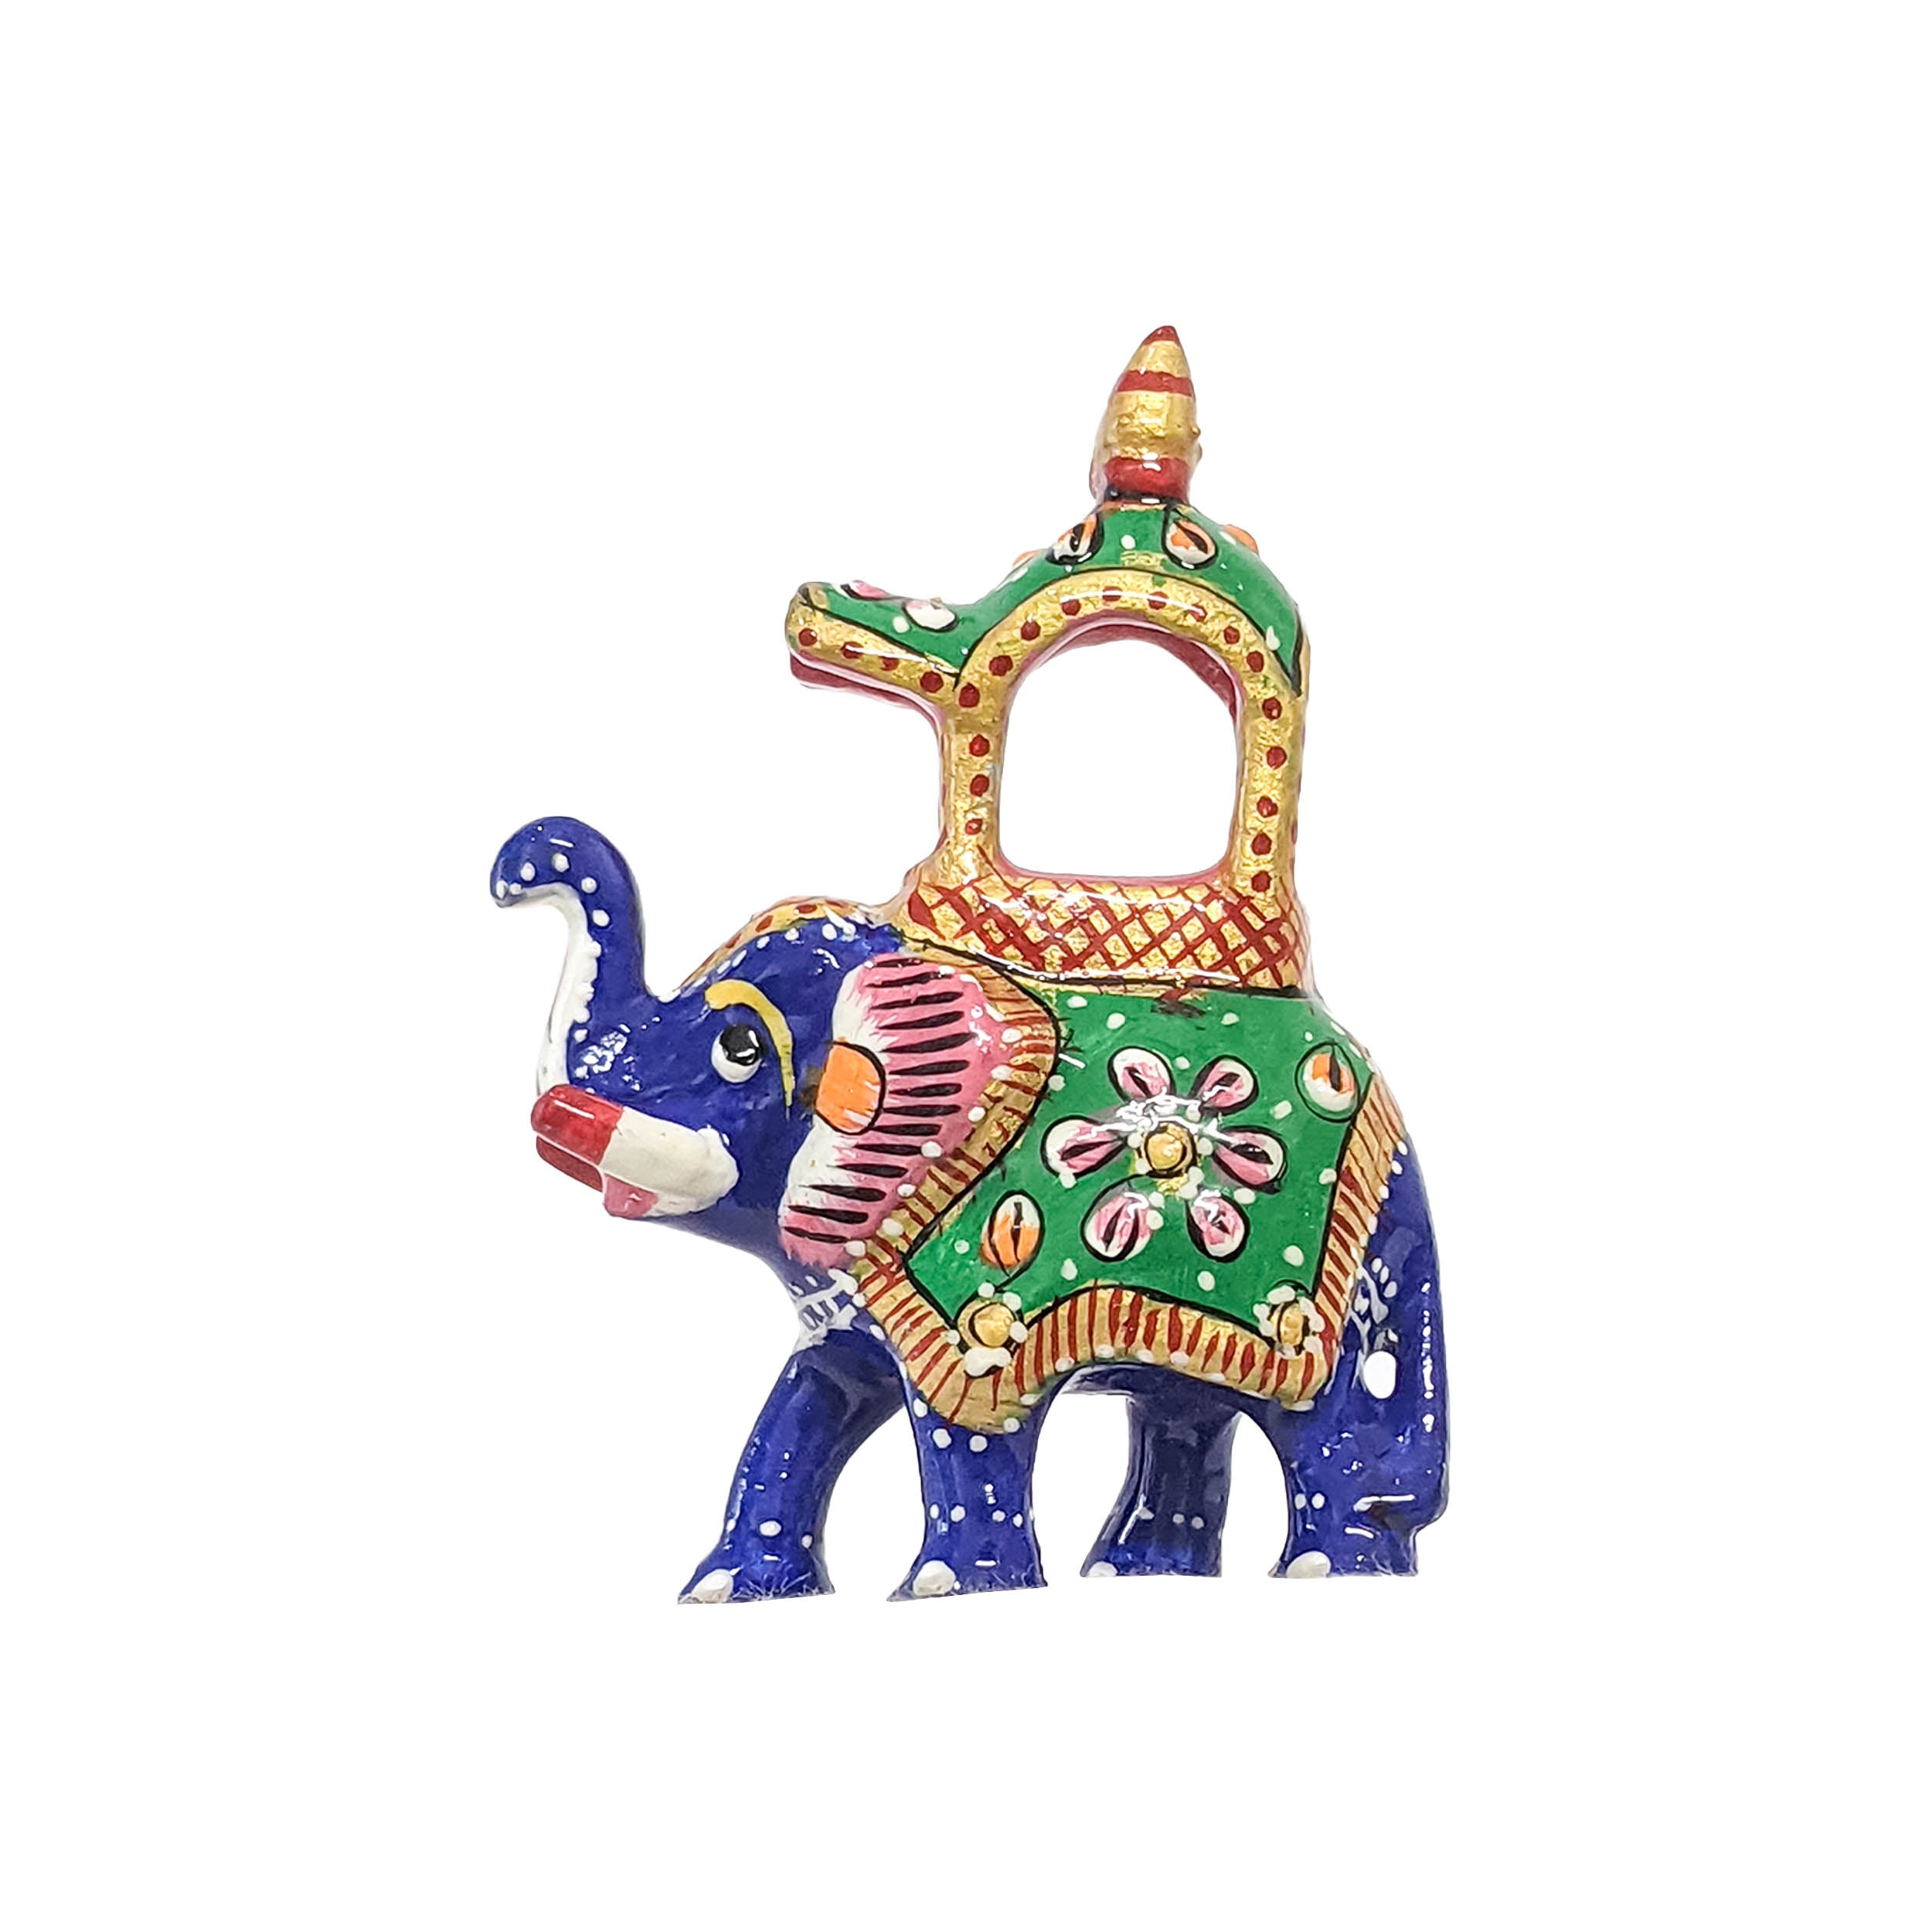 Handpainted Elephant With Meenakari Artwork Handicraft Elephant (4 inch)